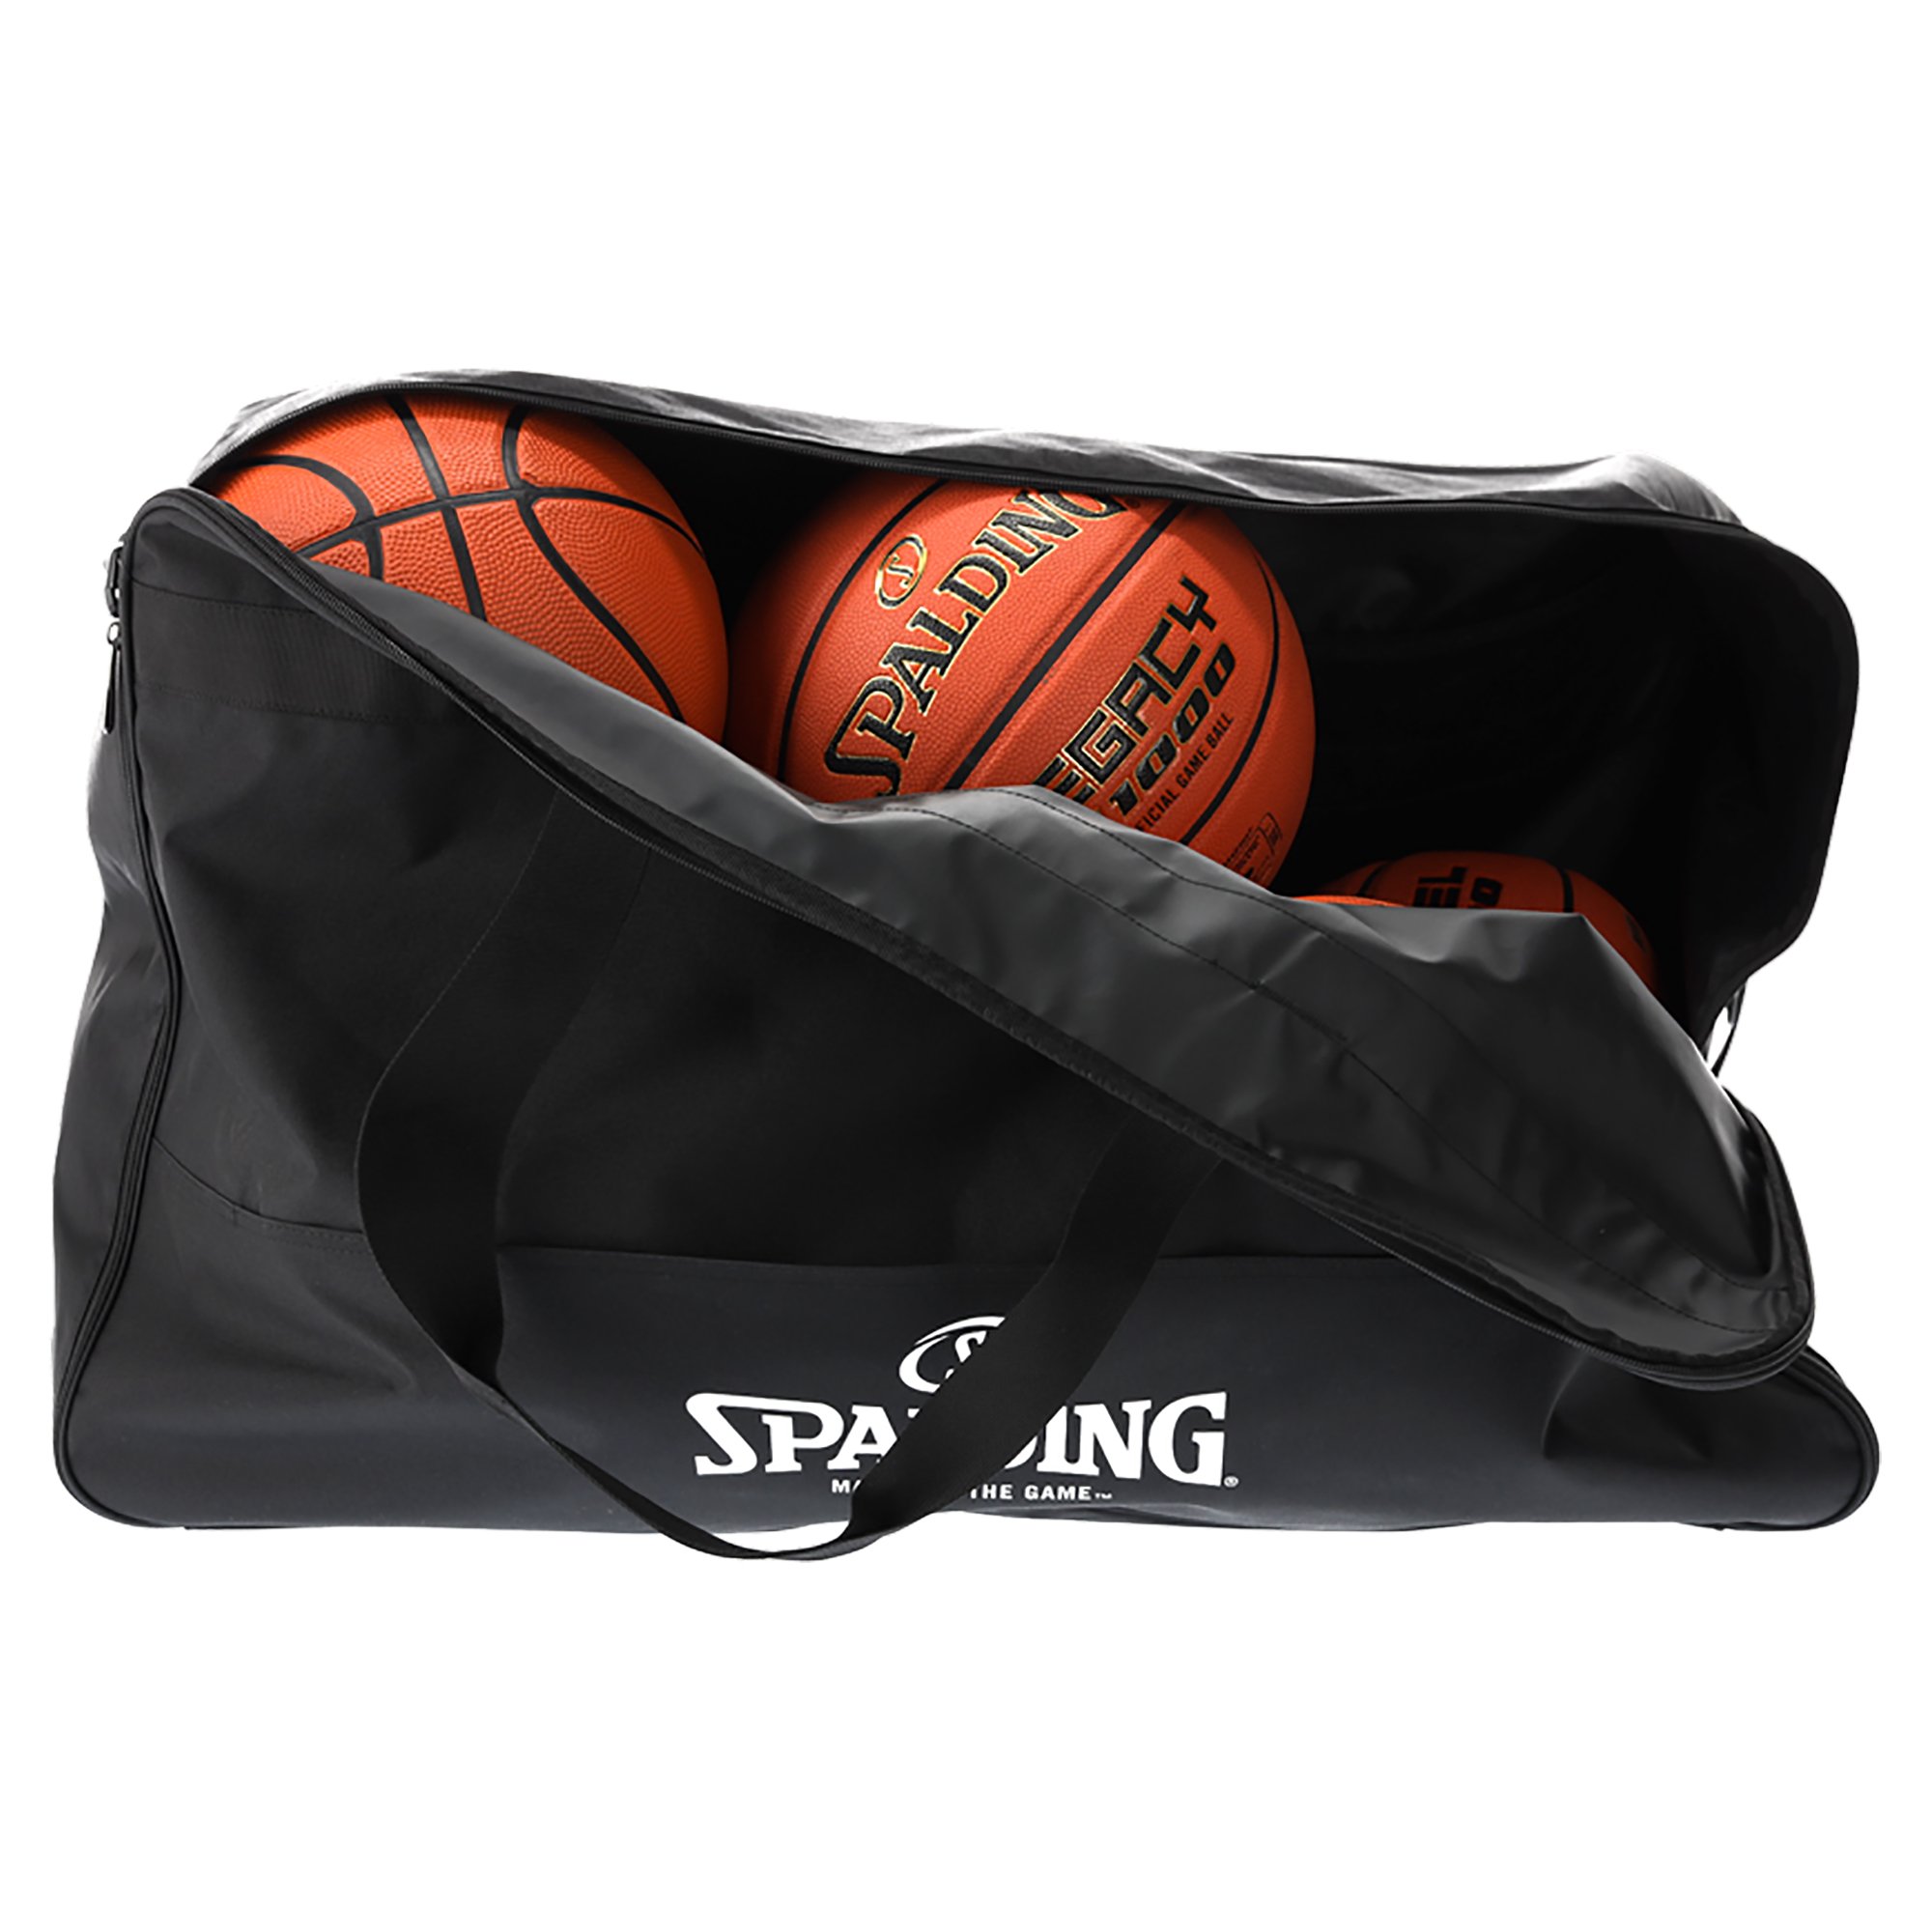 Spalding Ball Bag